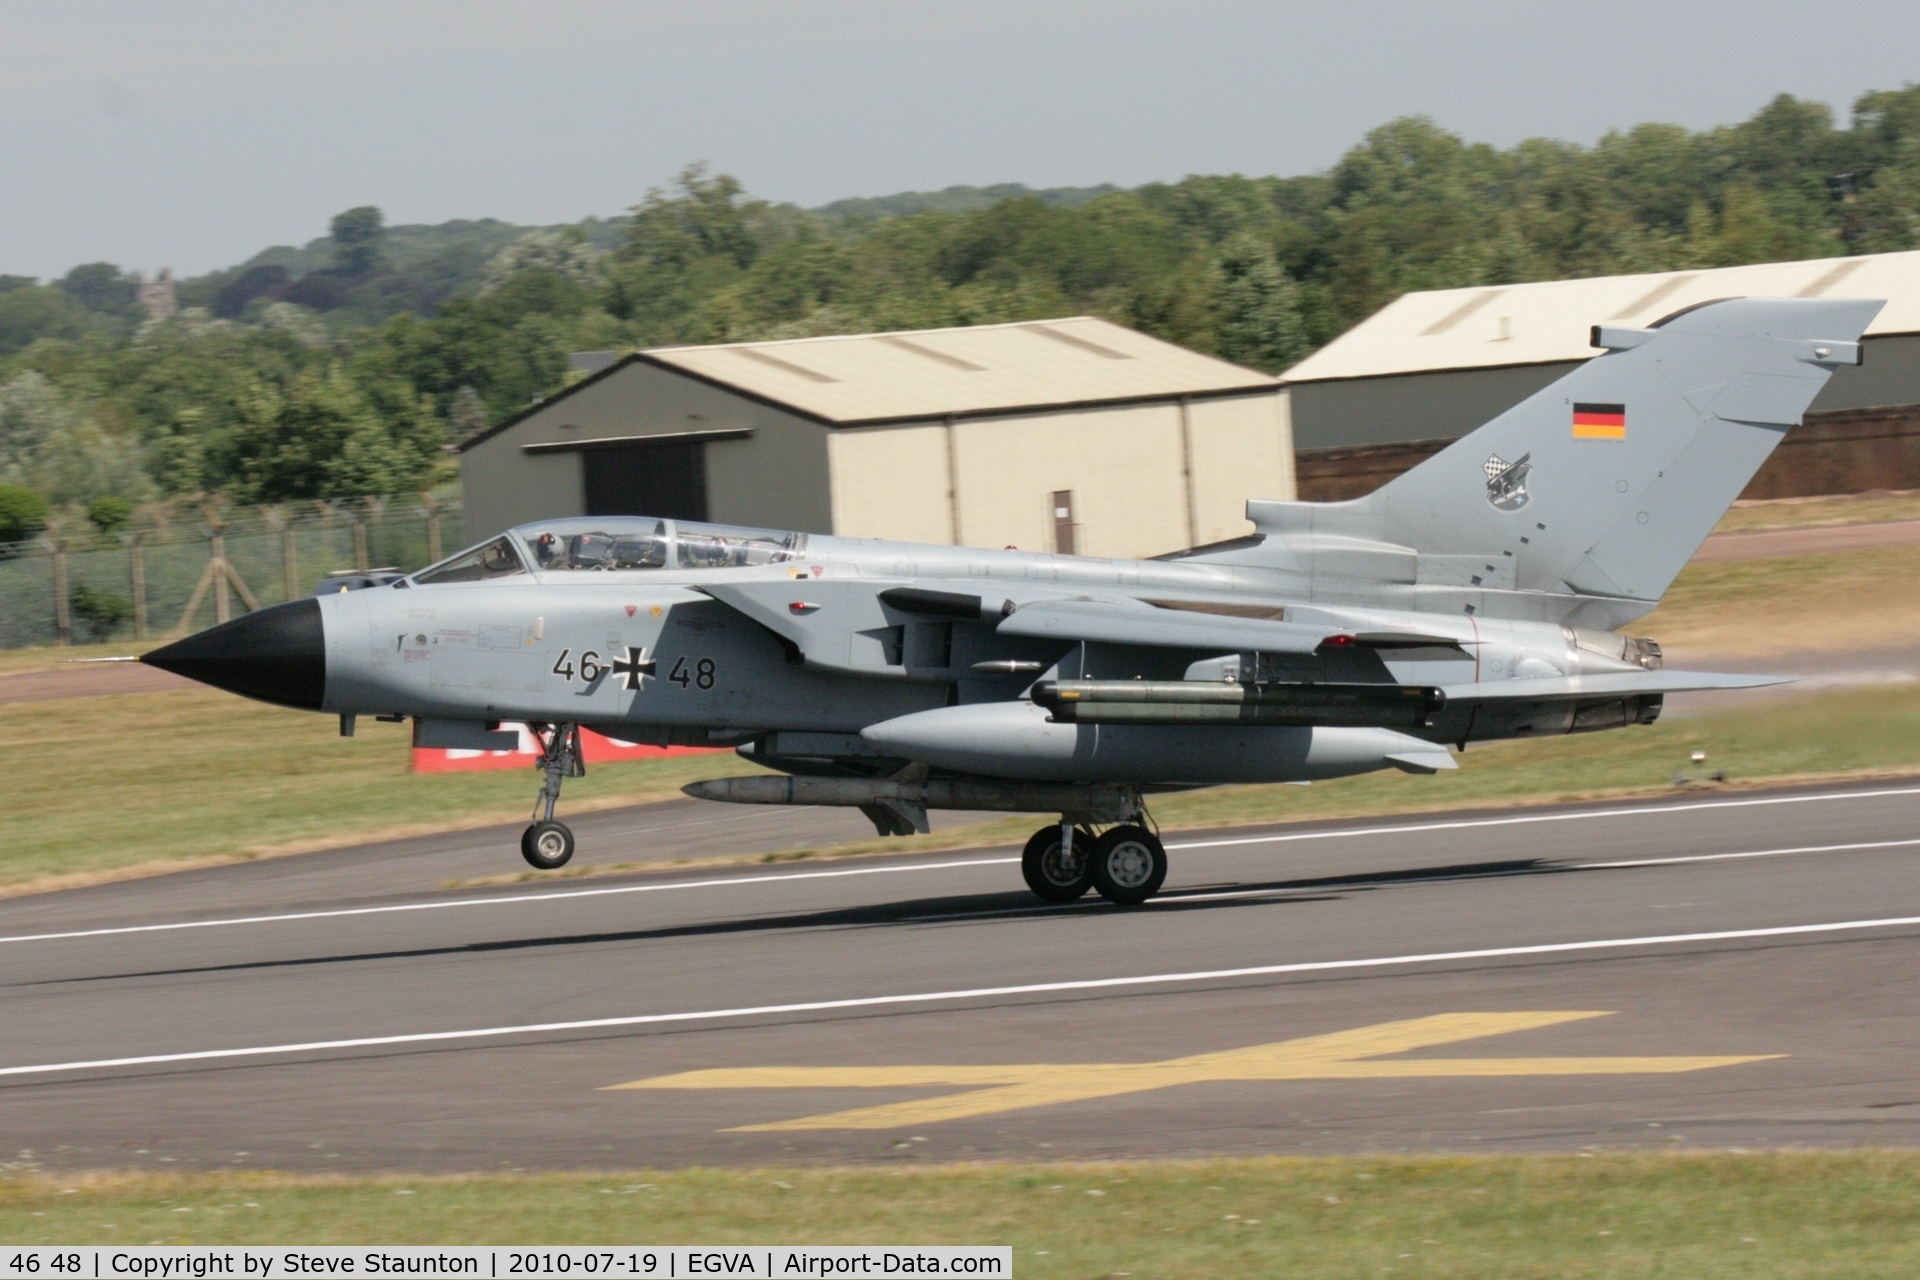 46 48, Panavia Tornado ECR C/N 881/GS281/4348, Taken at the Royal International Air Tattoo 2010